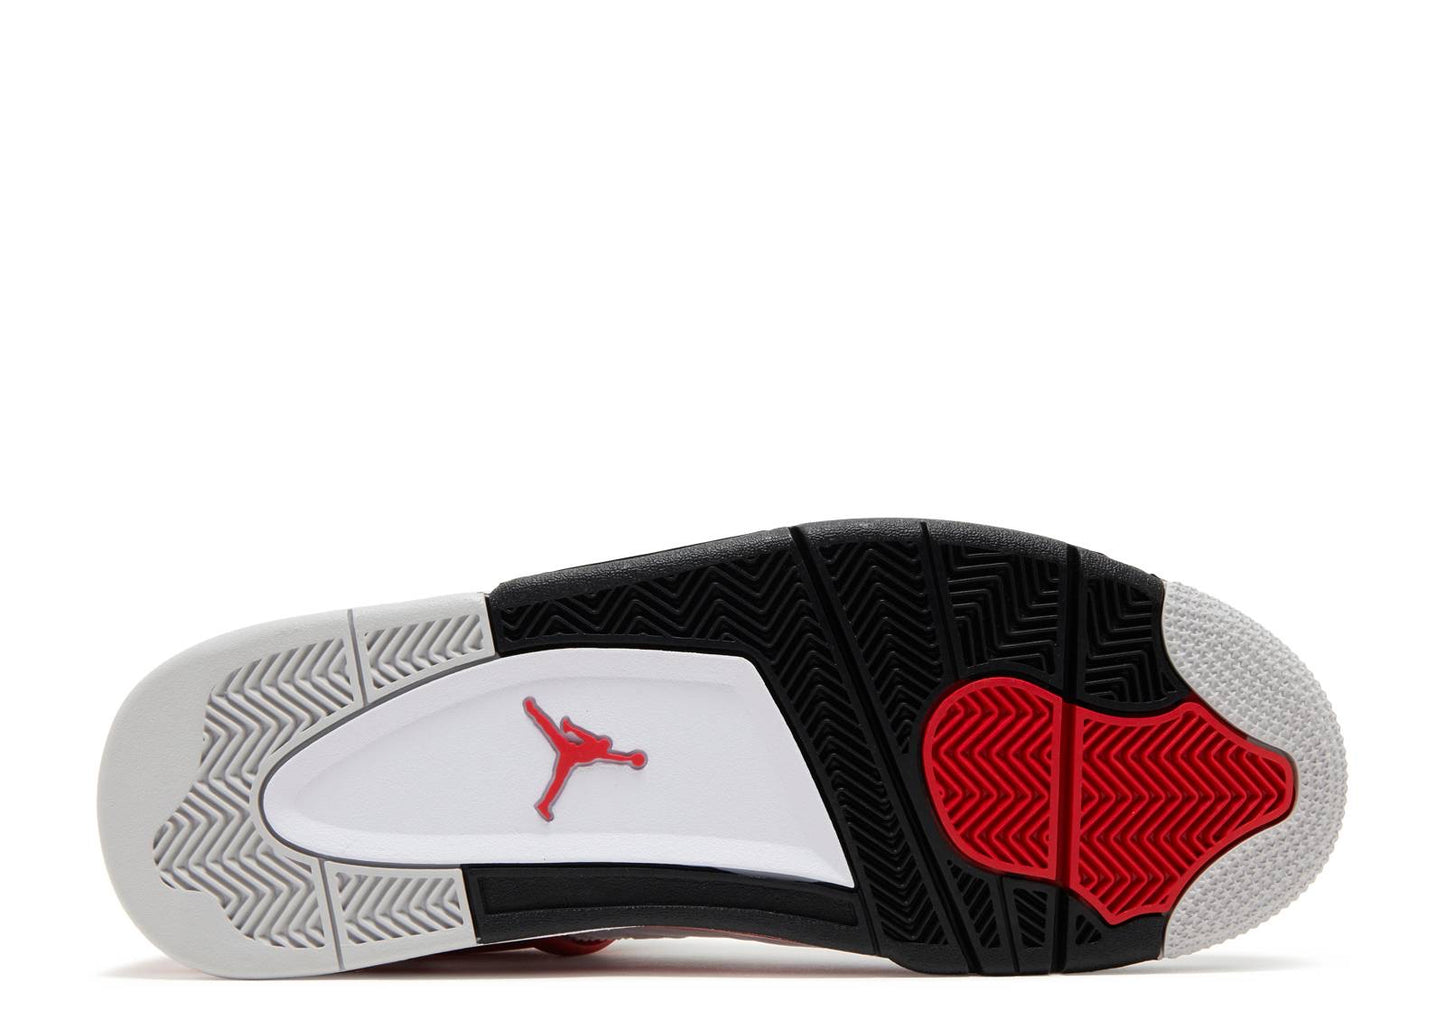 Air Jordan 4 Retro “Red Cement”